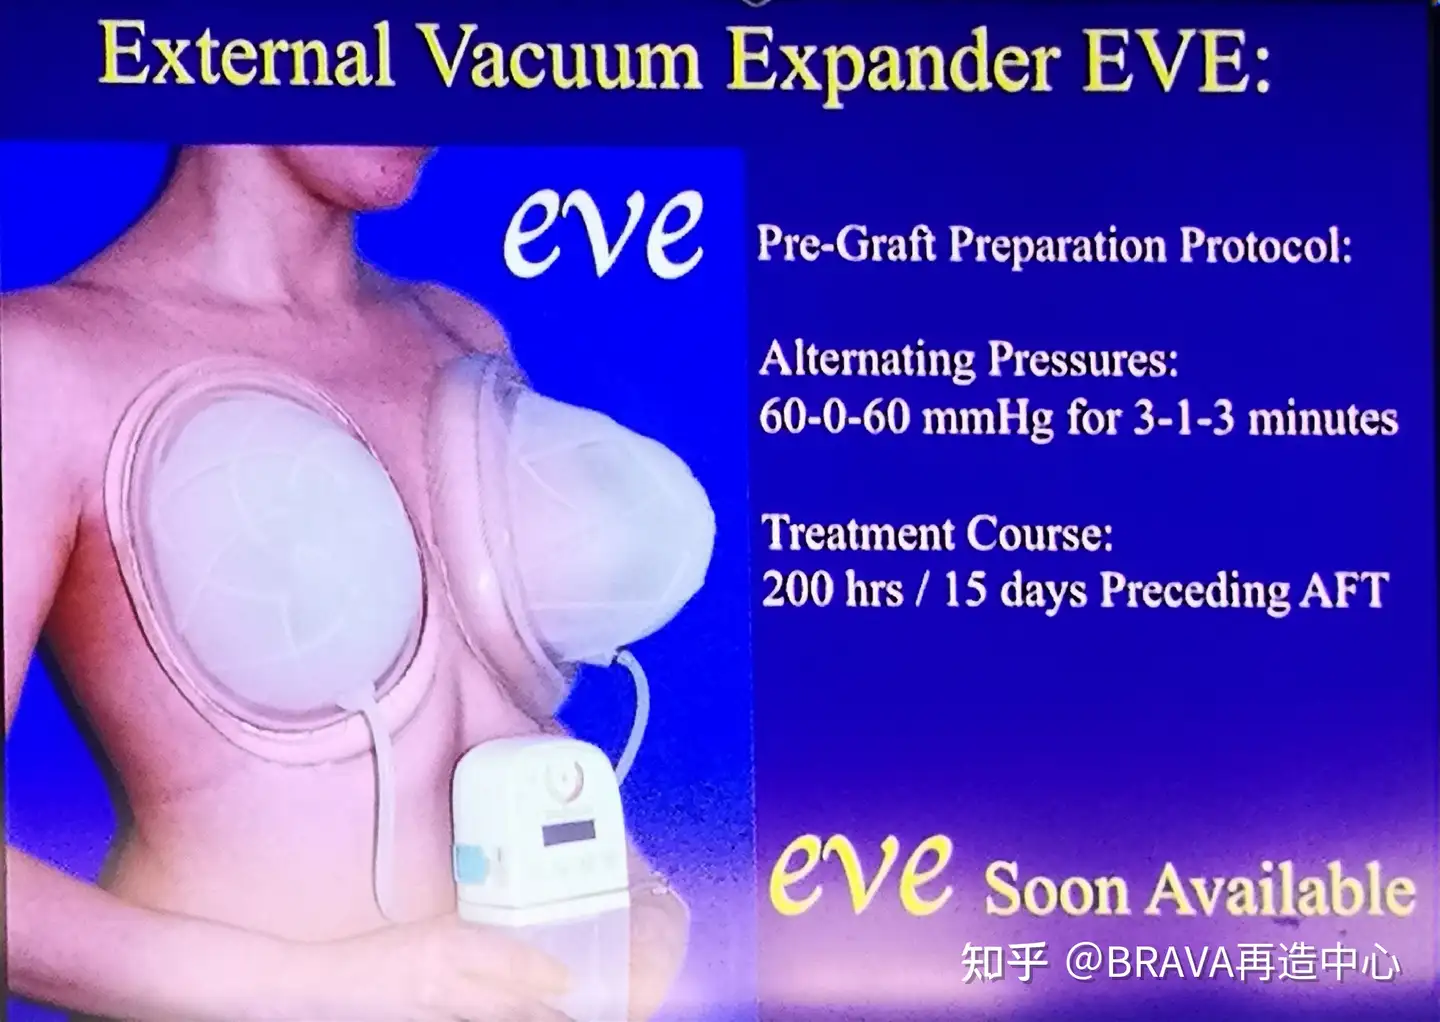 Brava アメリカFDA認可の豊胸/乳房拡張機器-